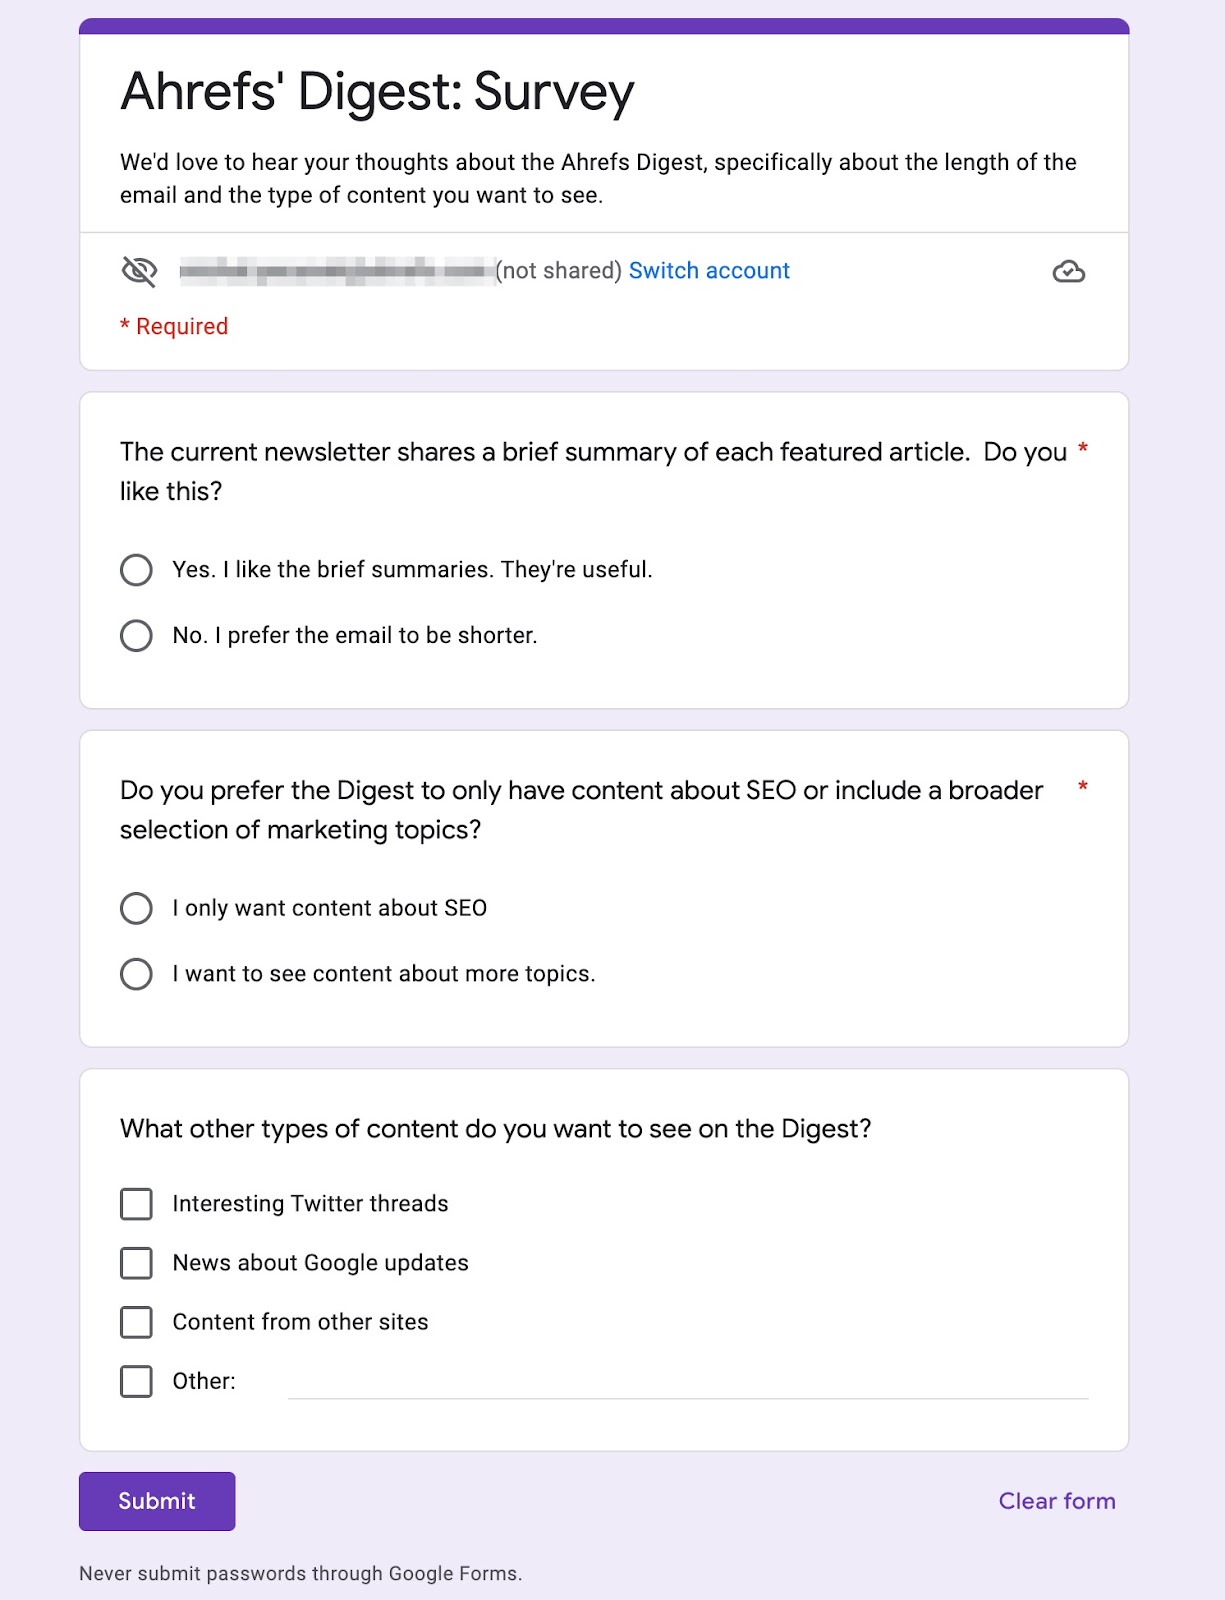 Ahrefs' Digest survey on Google Forms